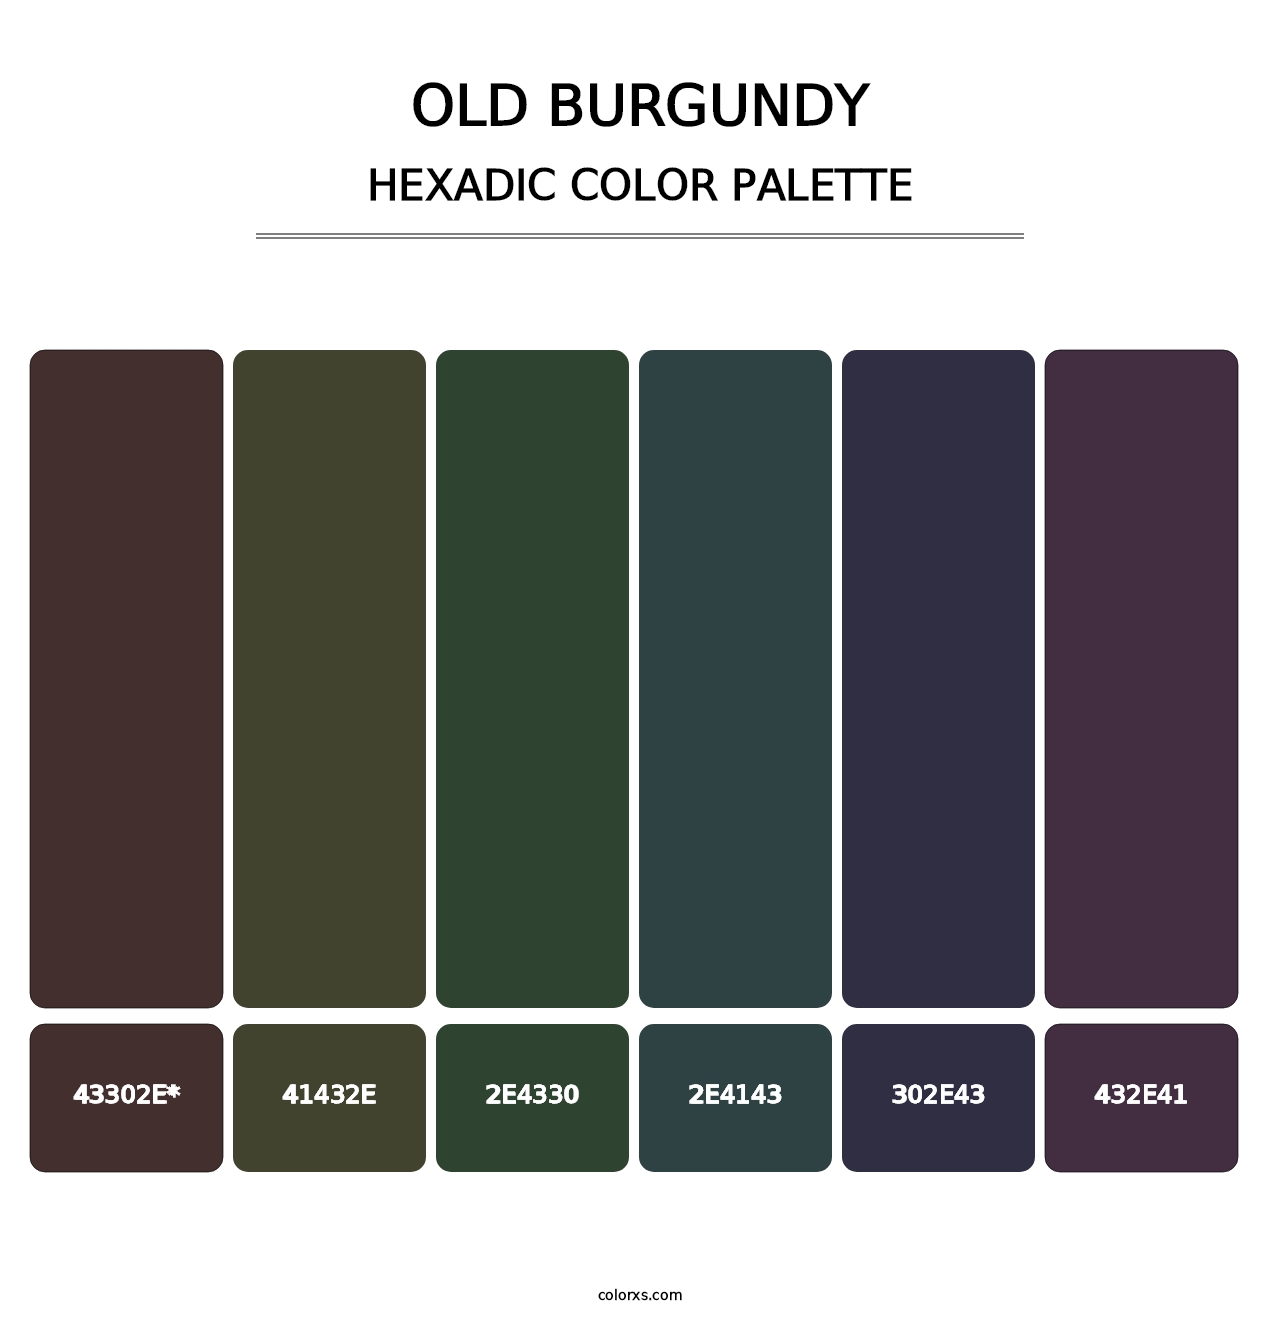 Old Burgundy - Hexadic Color Palette